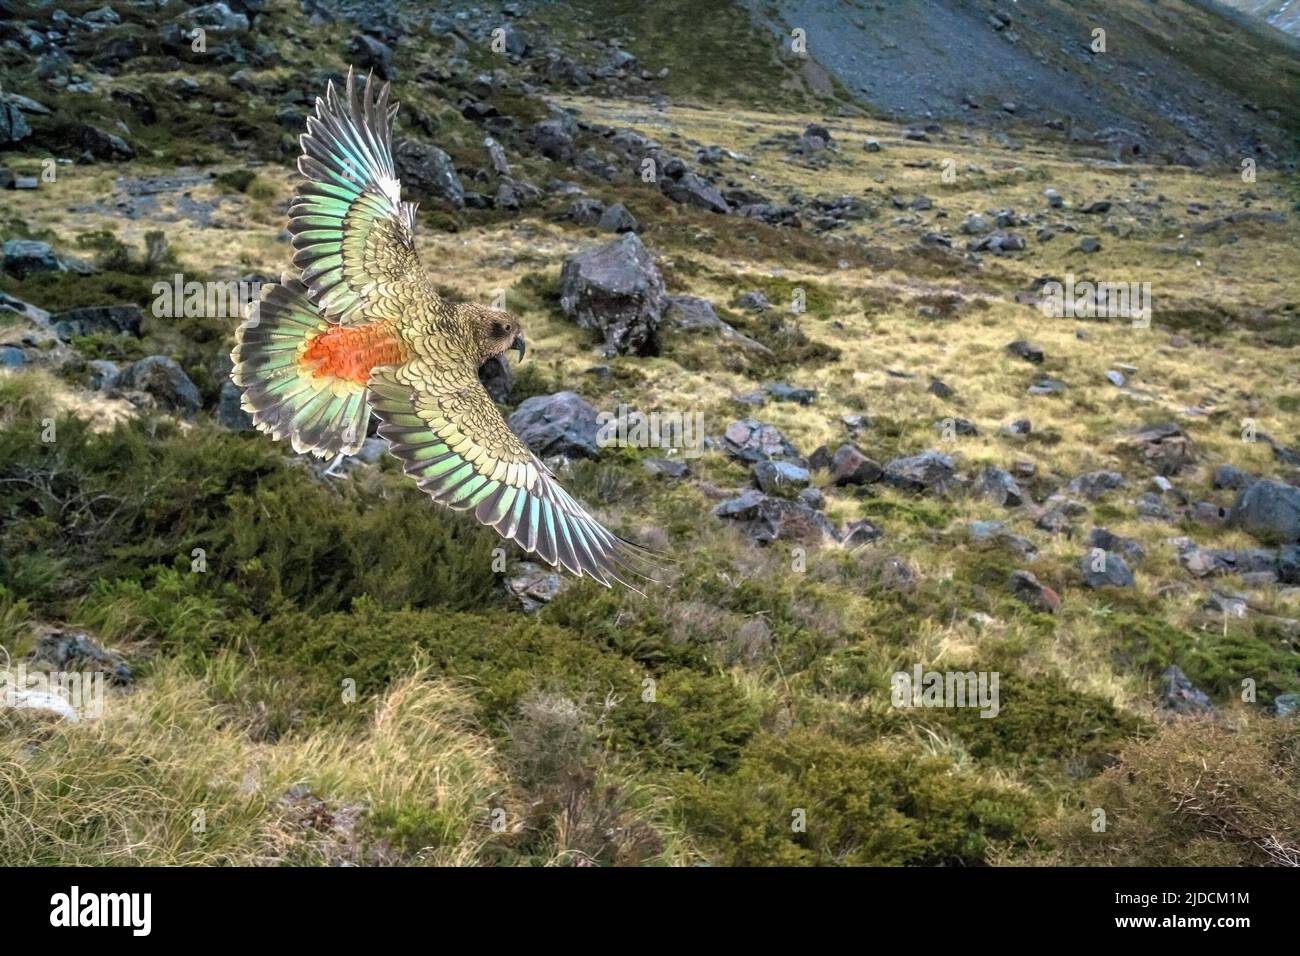 Kea ( Nestor notabilis ) or Alpine Parrot, New Zealand Endemic, Credit:ROBIN BUSH / Avalon Stock Photo